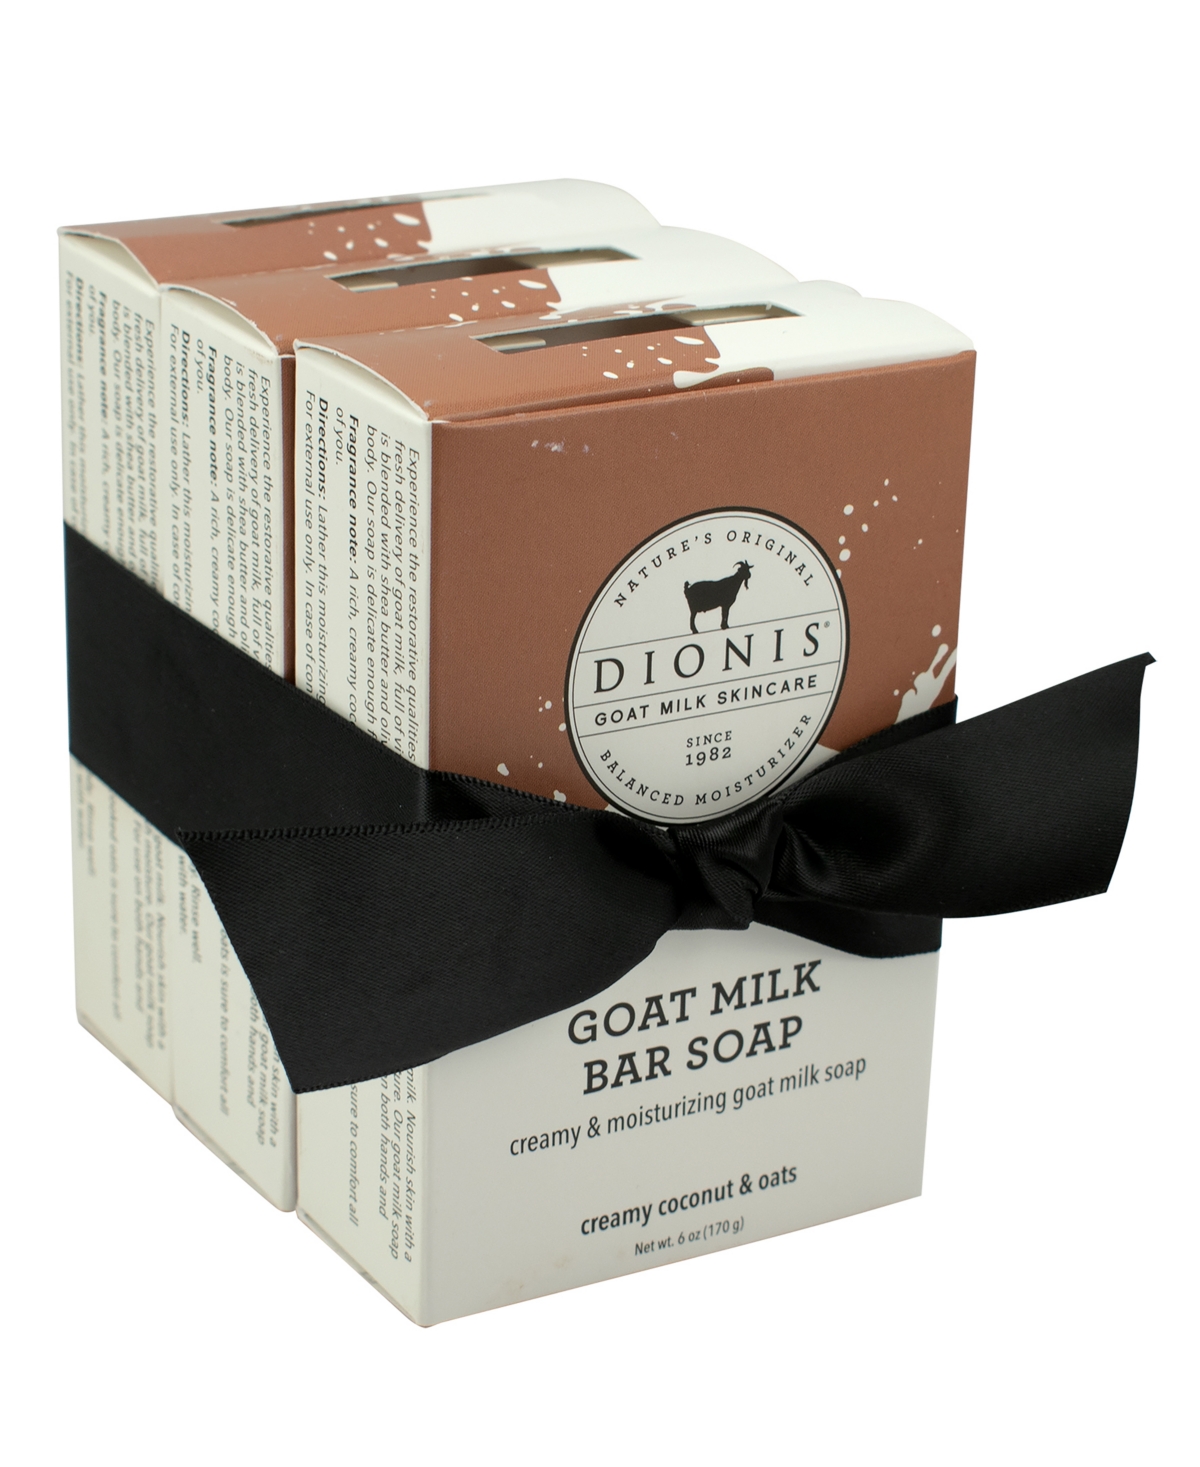 Creamy Coconut Oats Goat Milk Bar Soap Bundle, Pack of 3